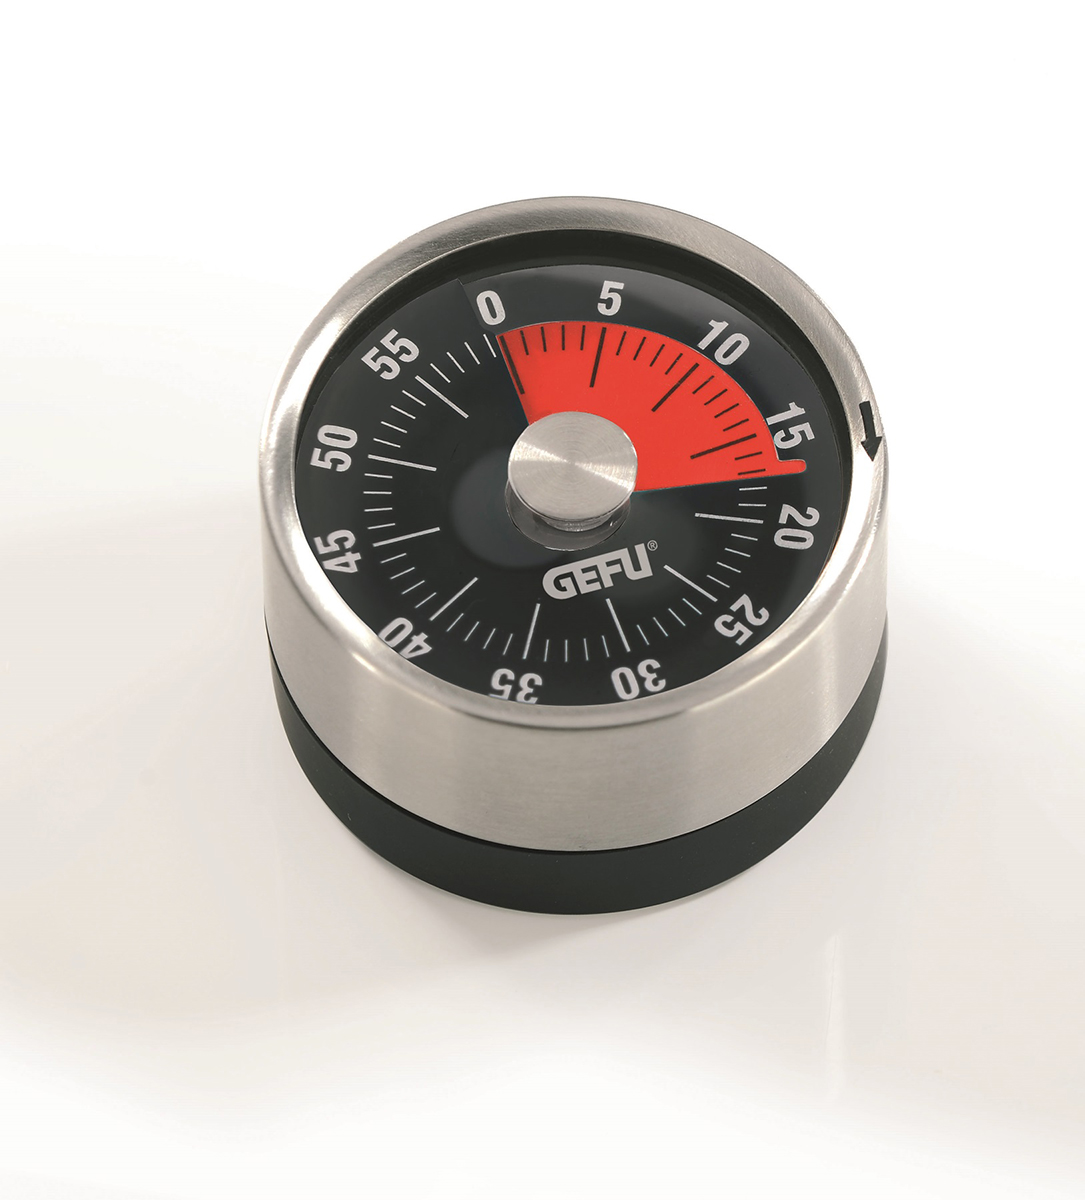 Gefu Digital Radio Roasting Thermometer with Digital Timer on Food52